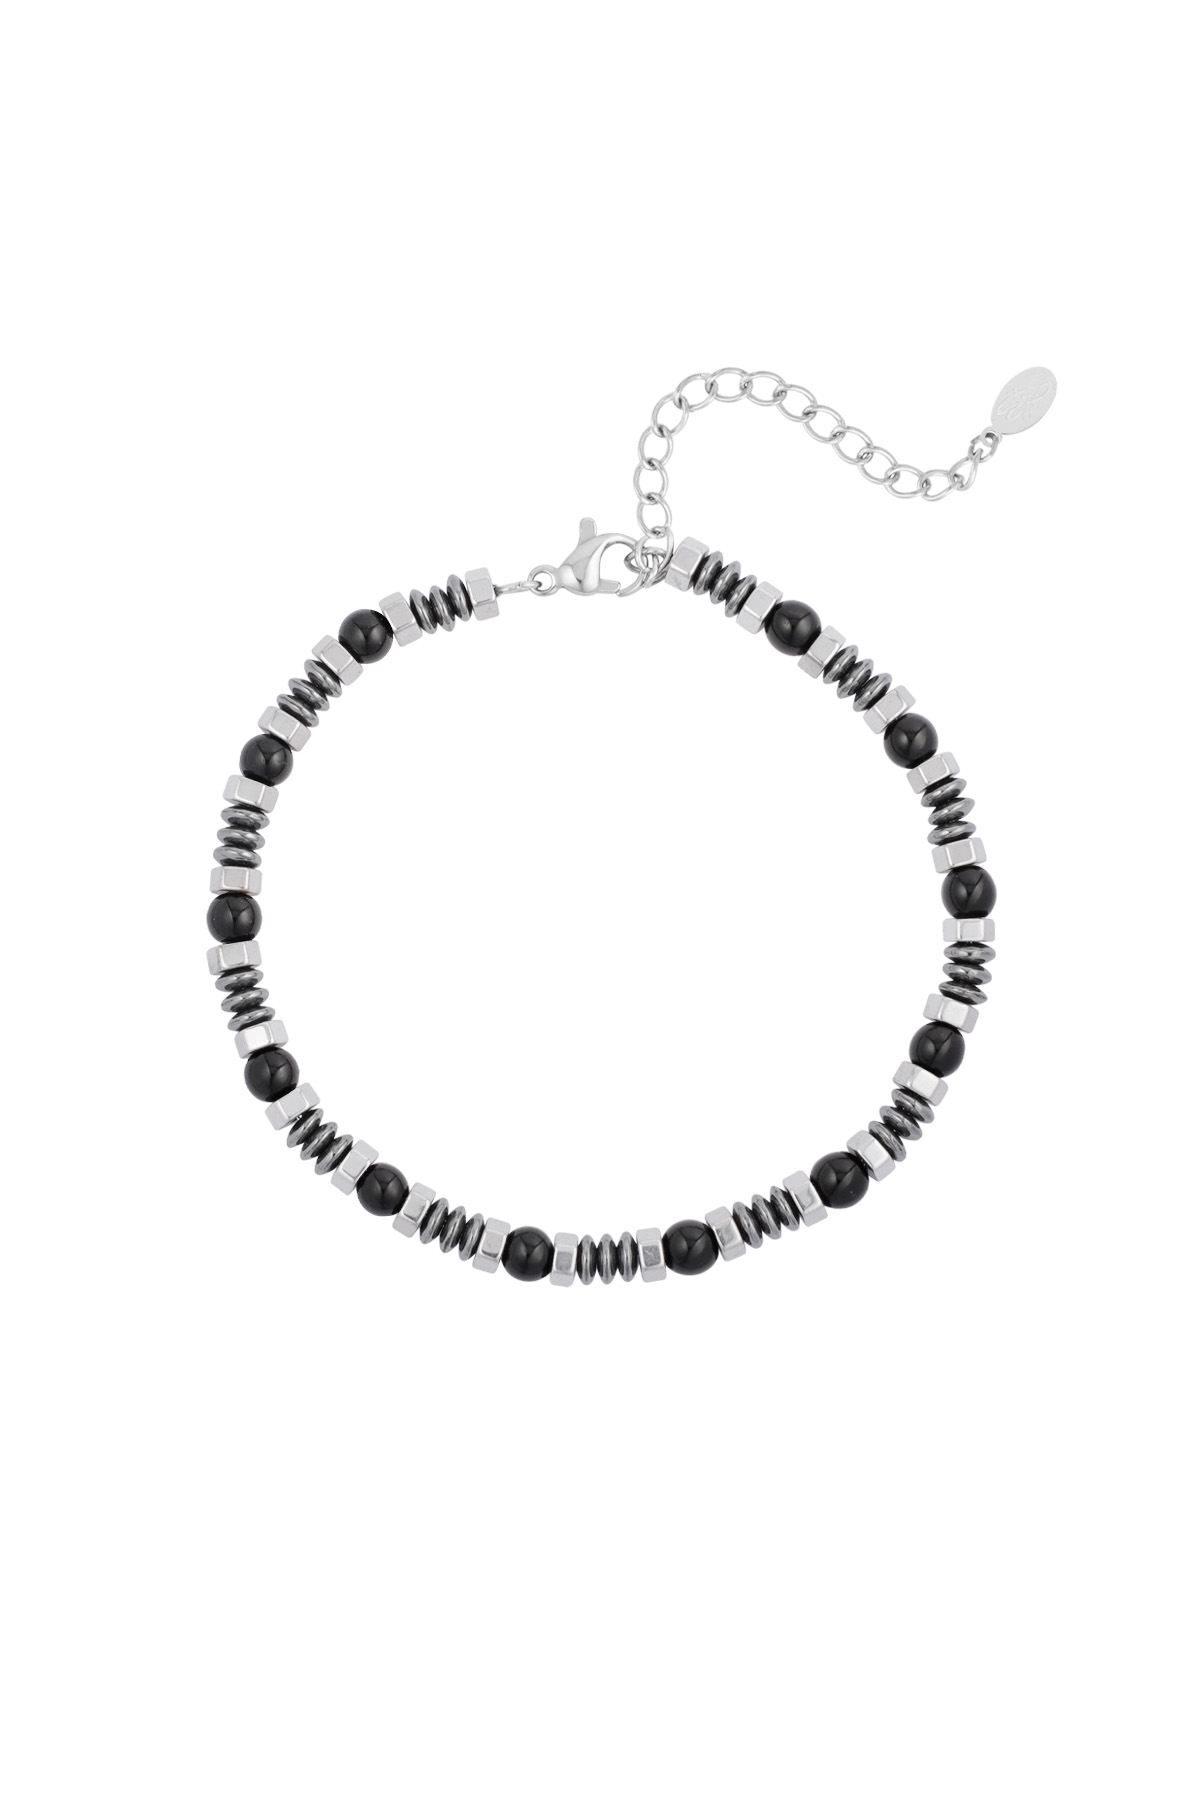 Simple men's bracelet with beads - black silver